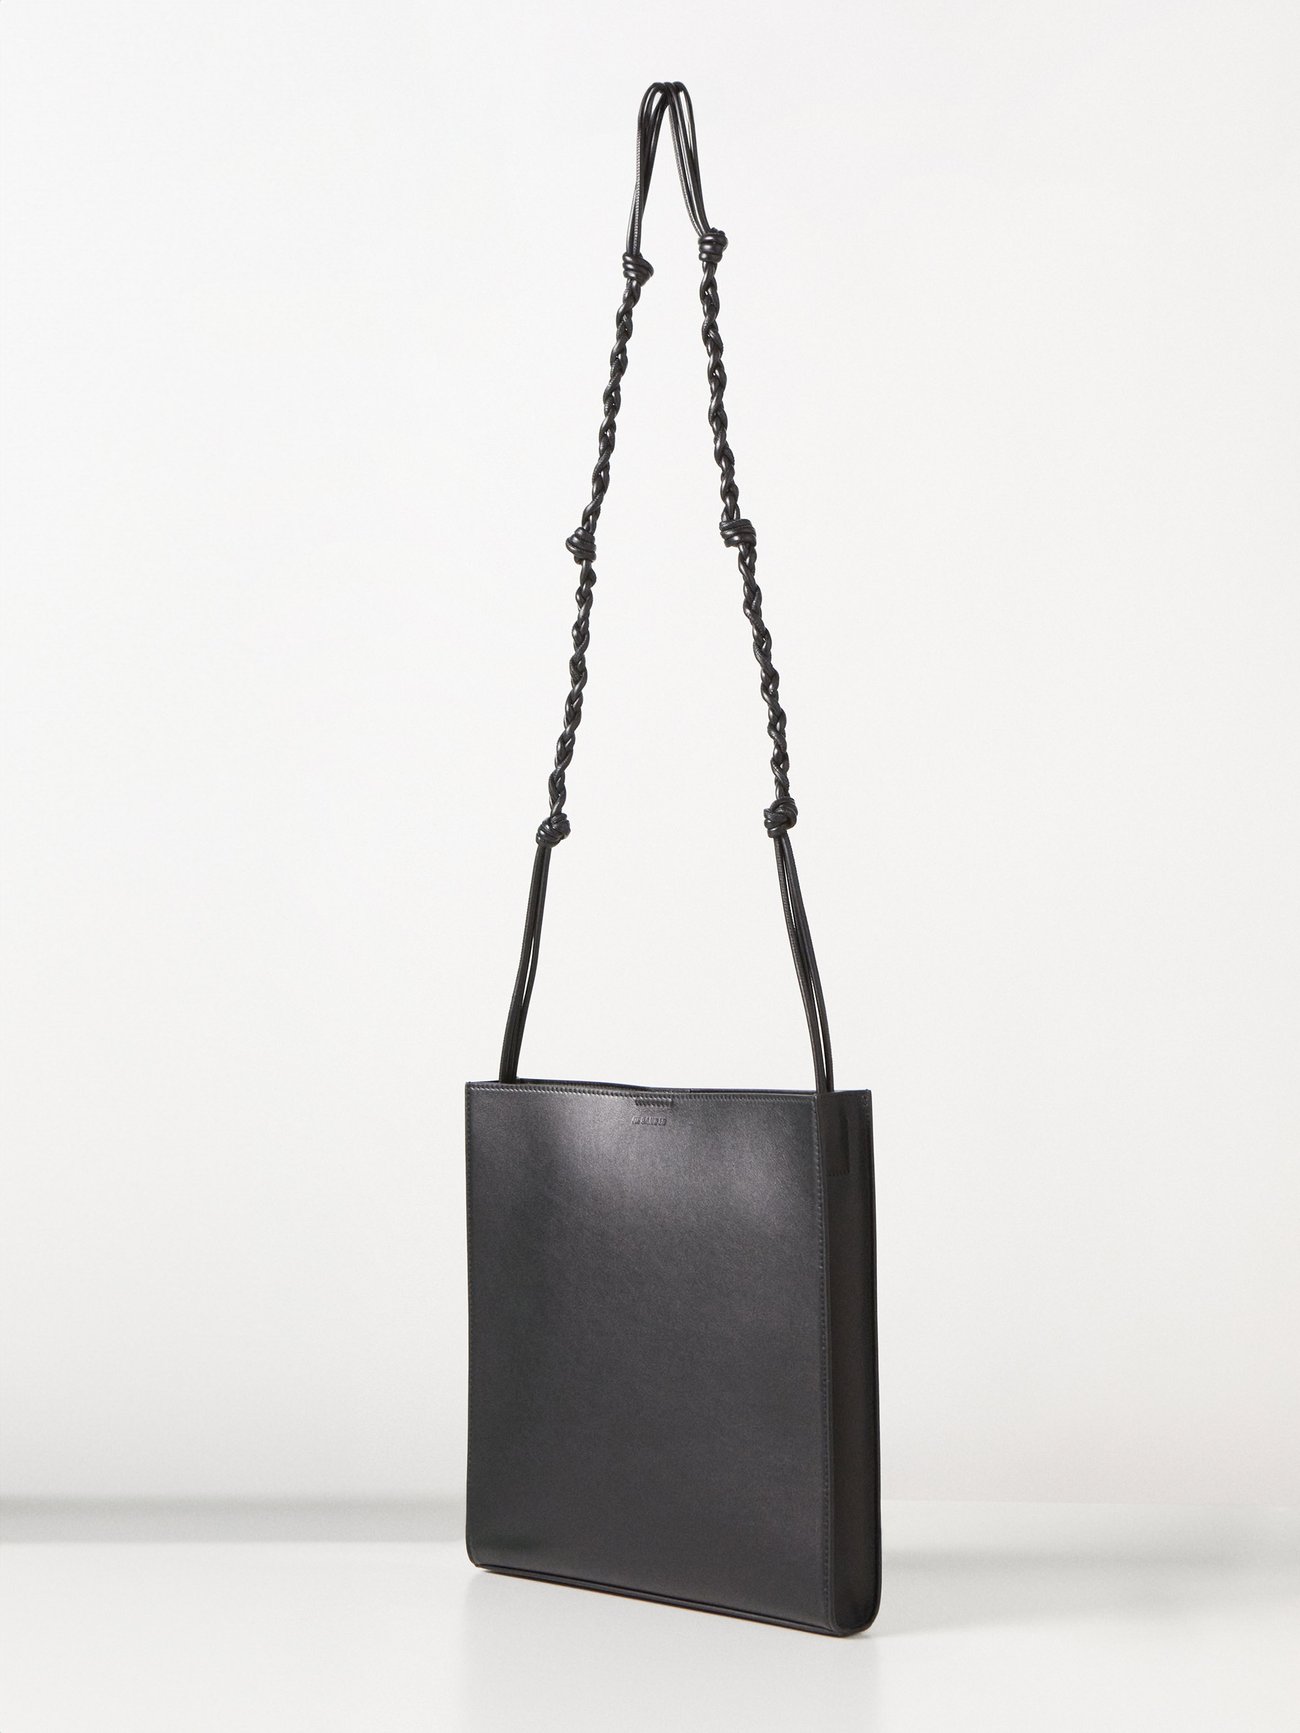 Tangle medium leather cross-body bag